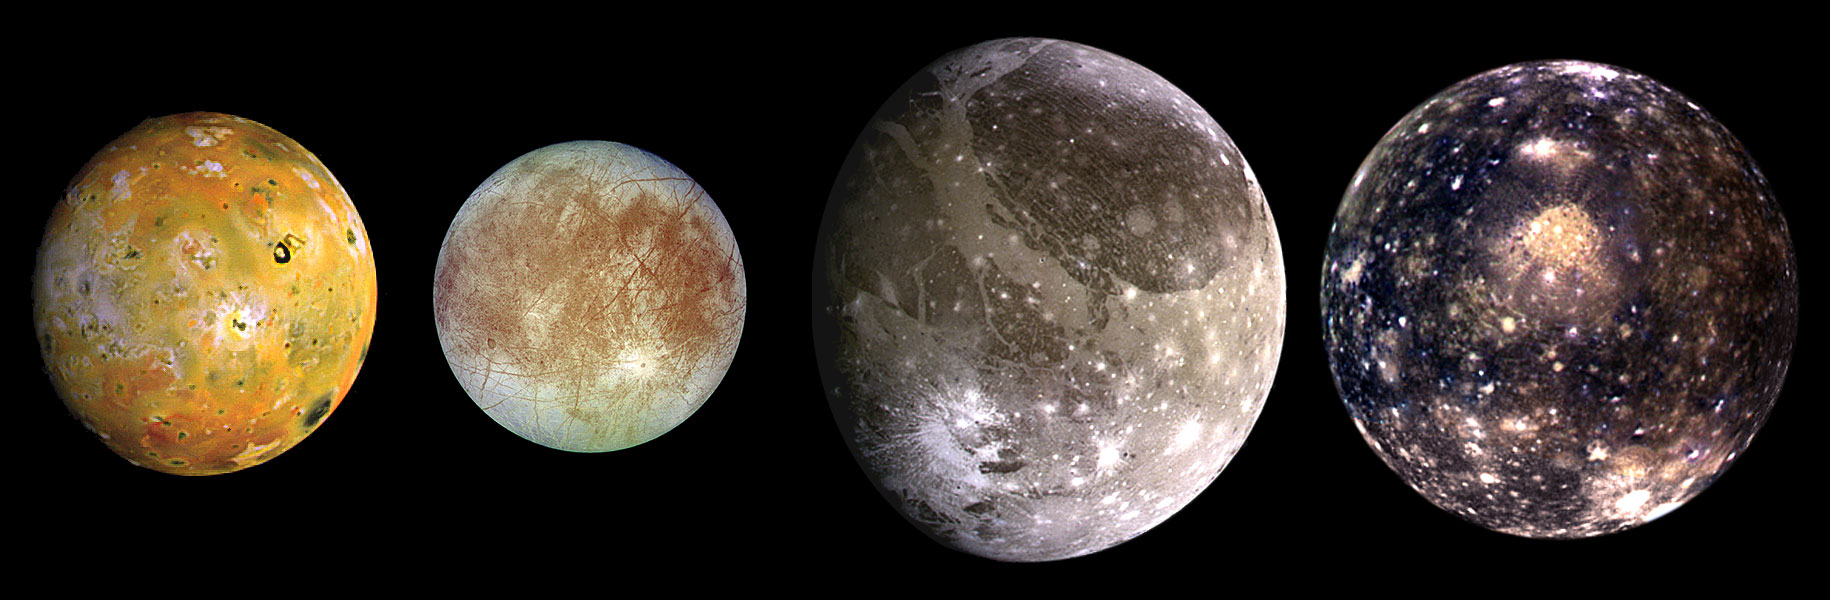 The Galilean moons Io, Europa, Ganymede, Callisto in order of increasing distance from Jupiter. Credit: NASA/JPL/DLR